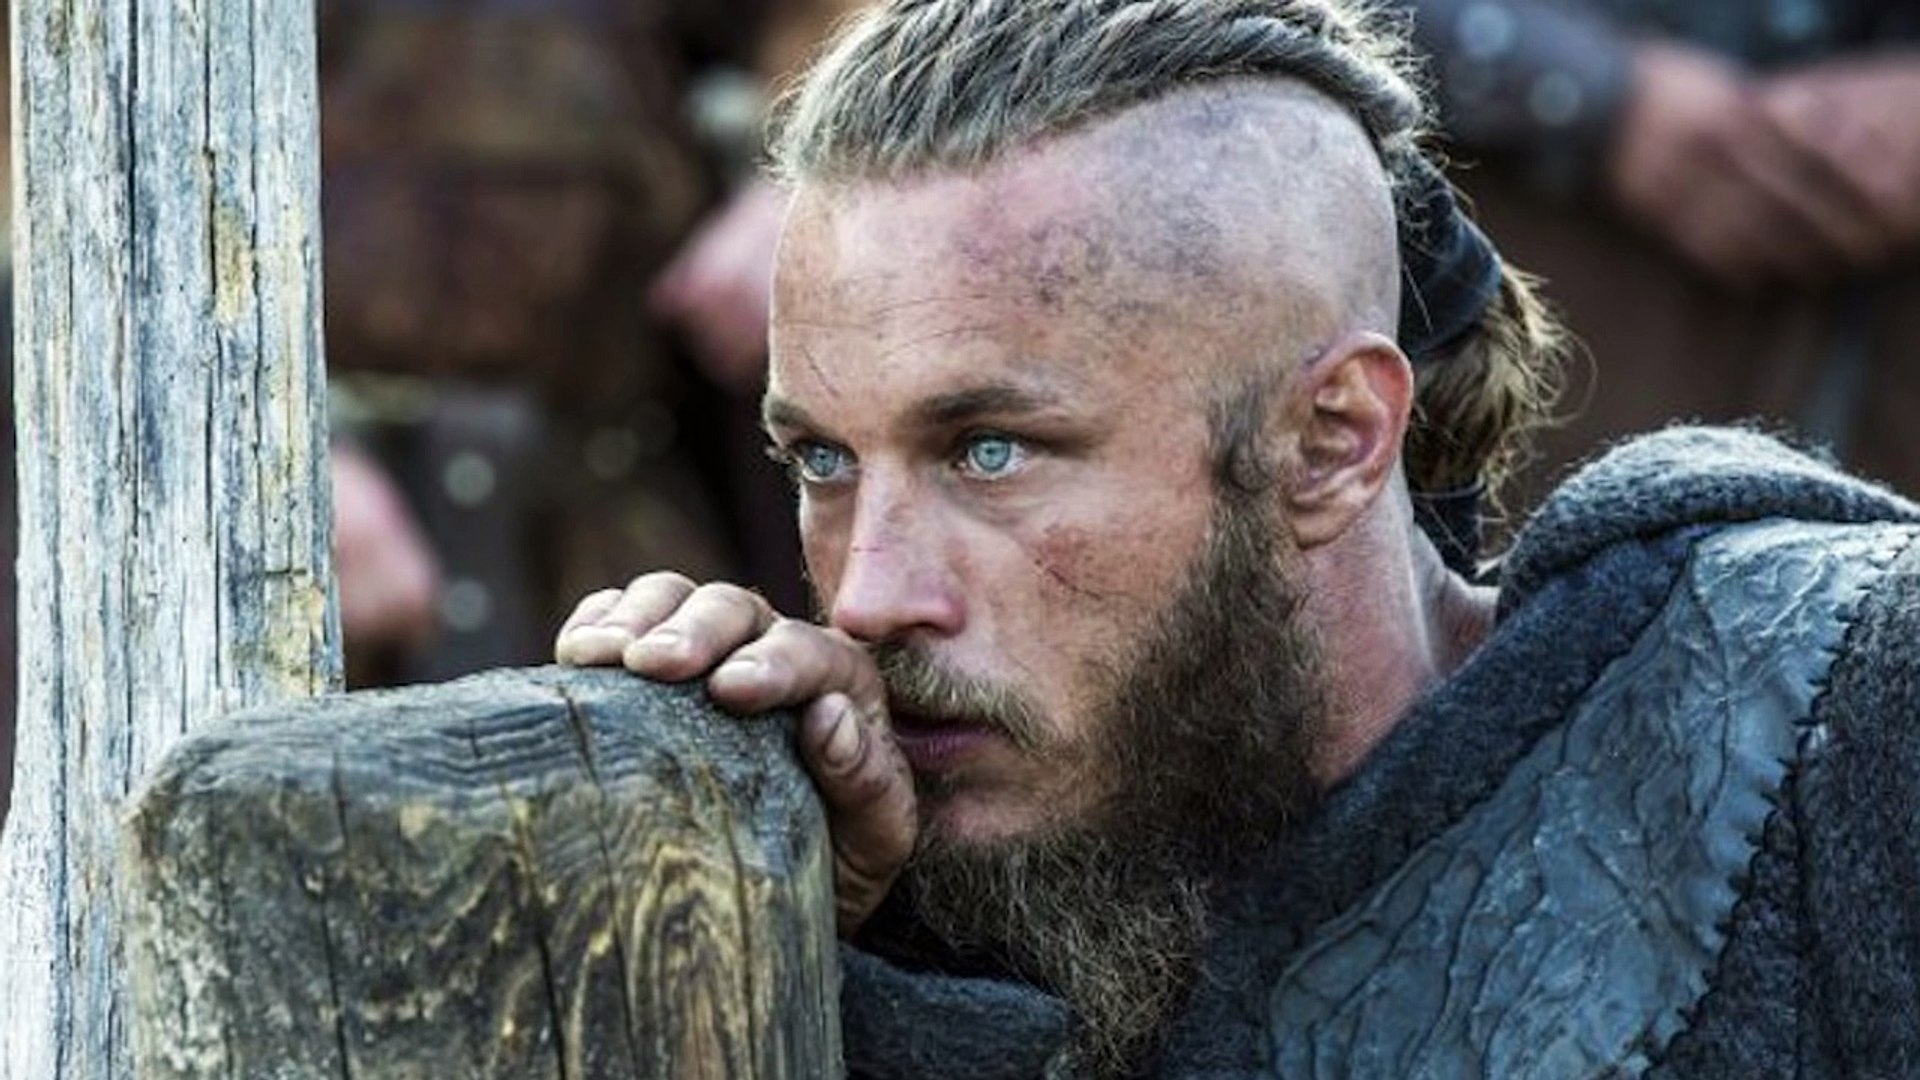 Vikings season 4: Lagertha & Ragnar back together? - video Dailymotion